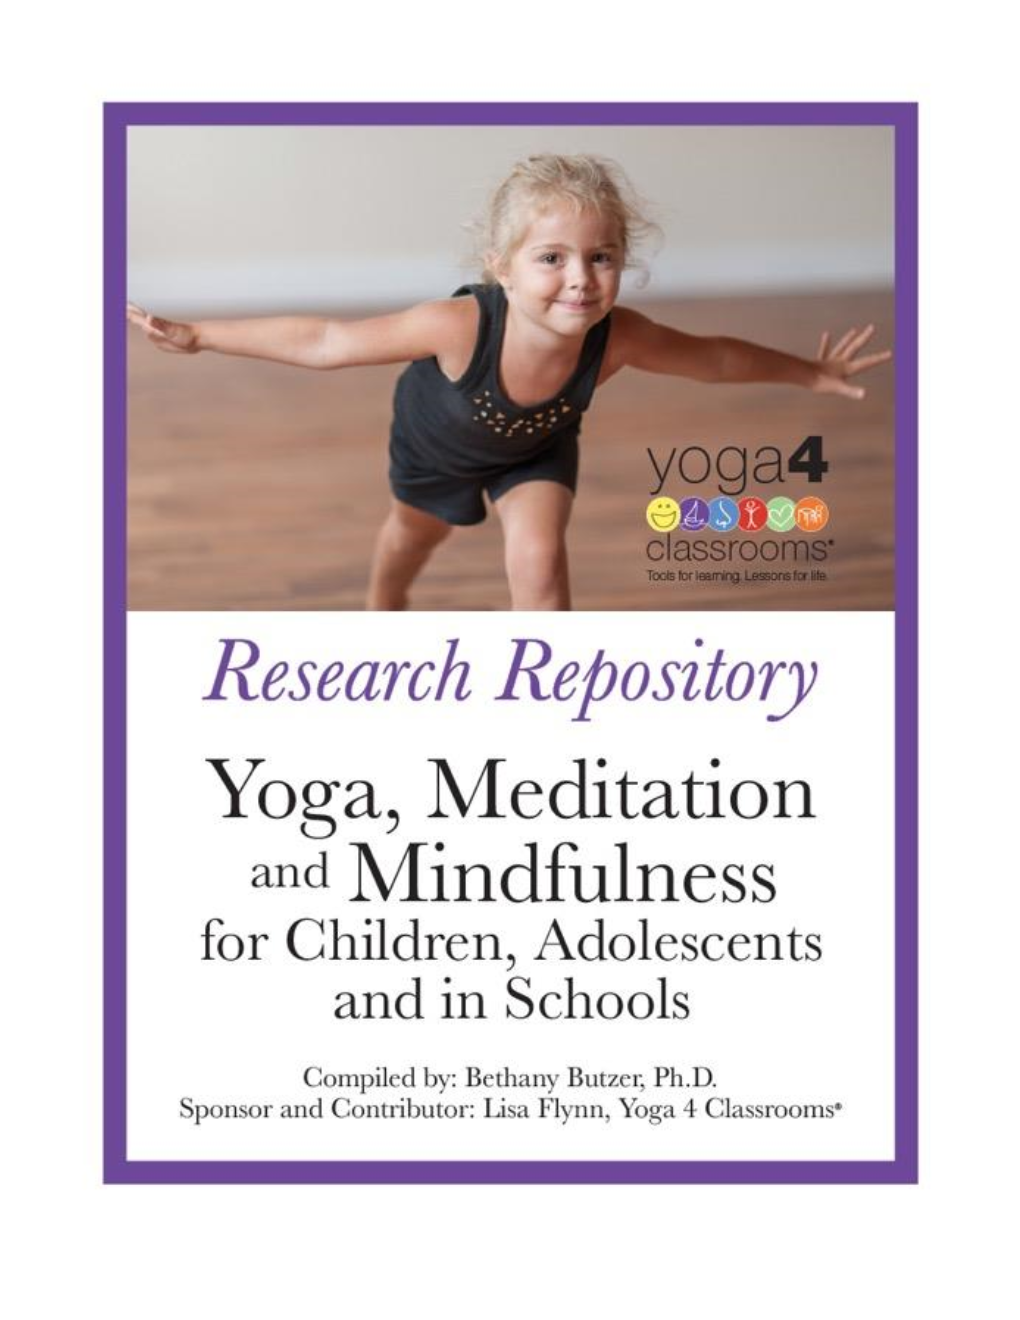 Yoga and Meditation for Children, Adolescents, Schools